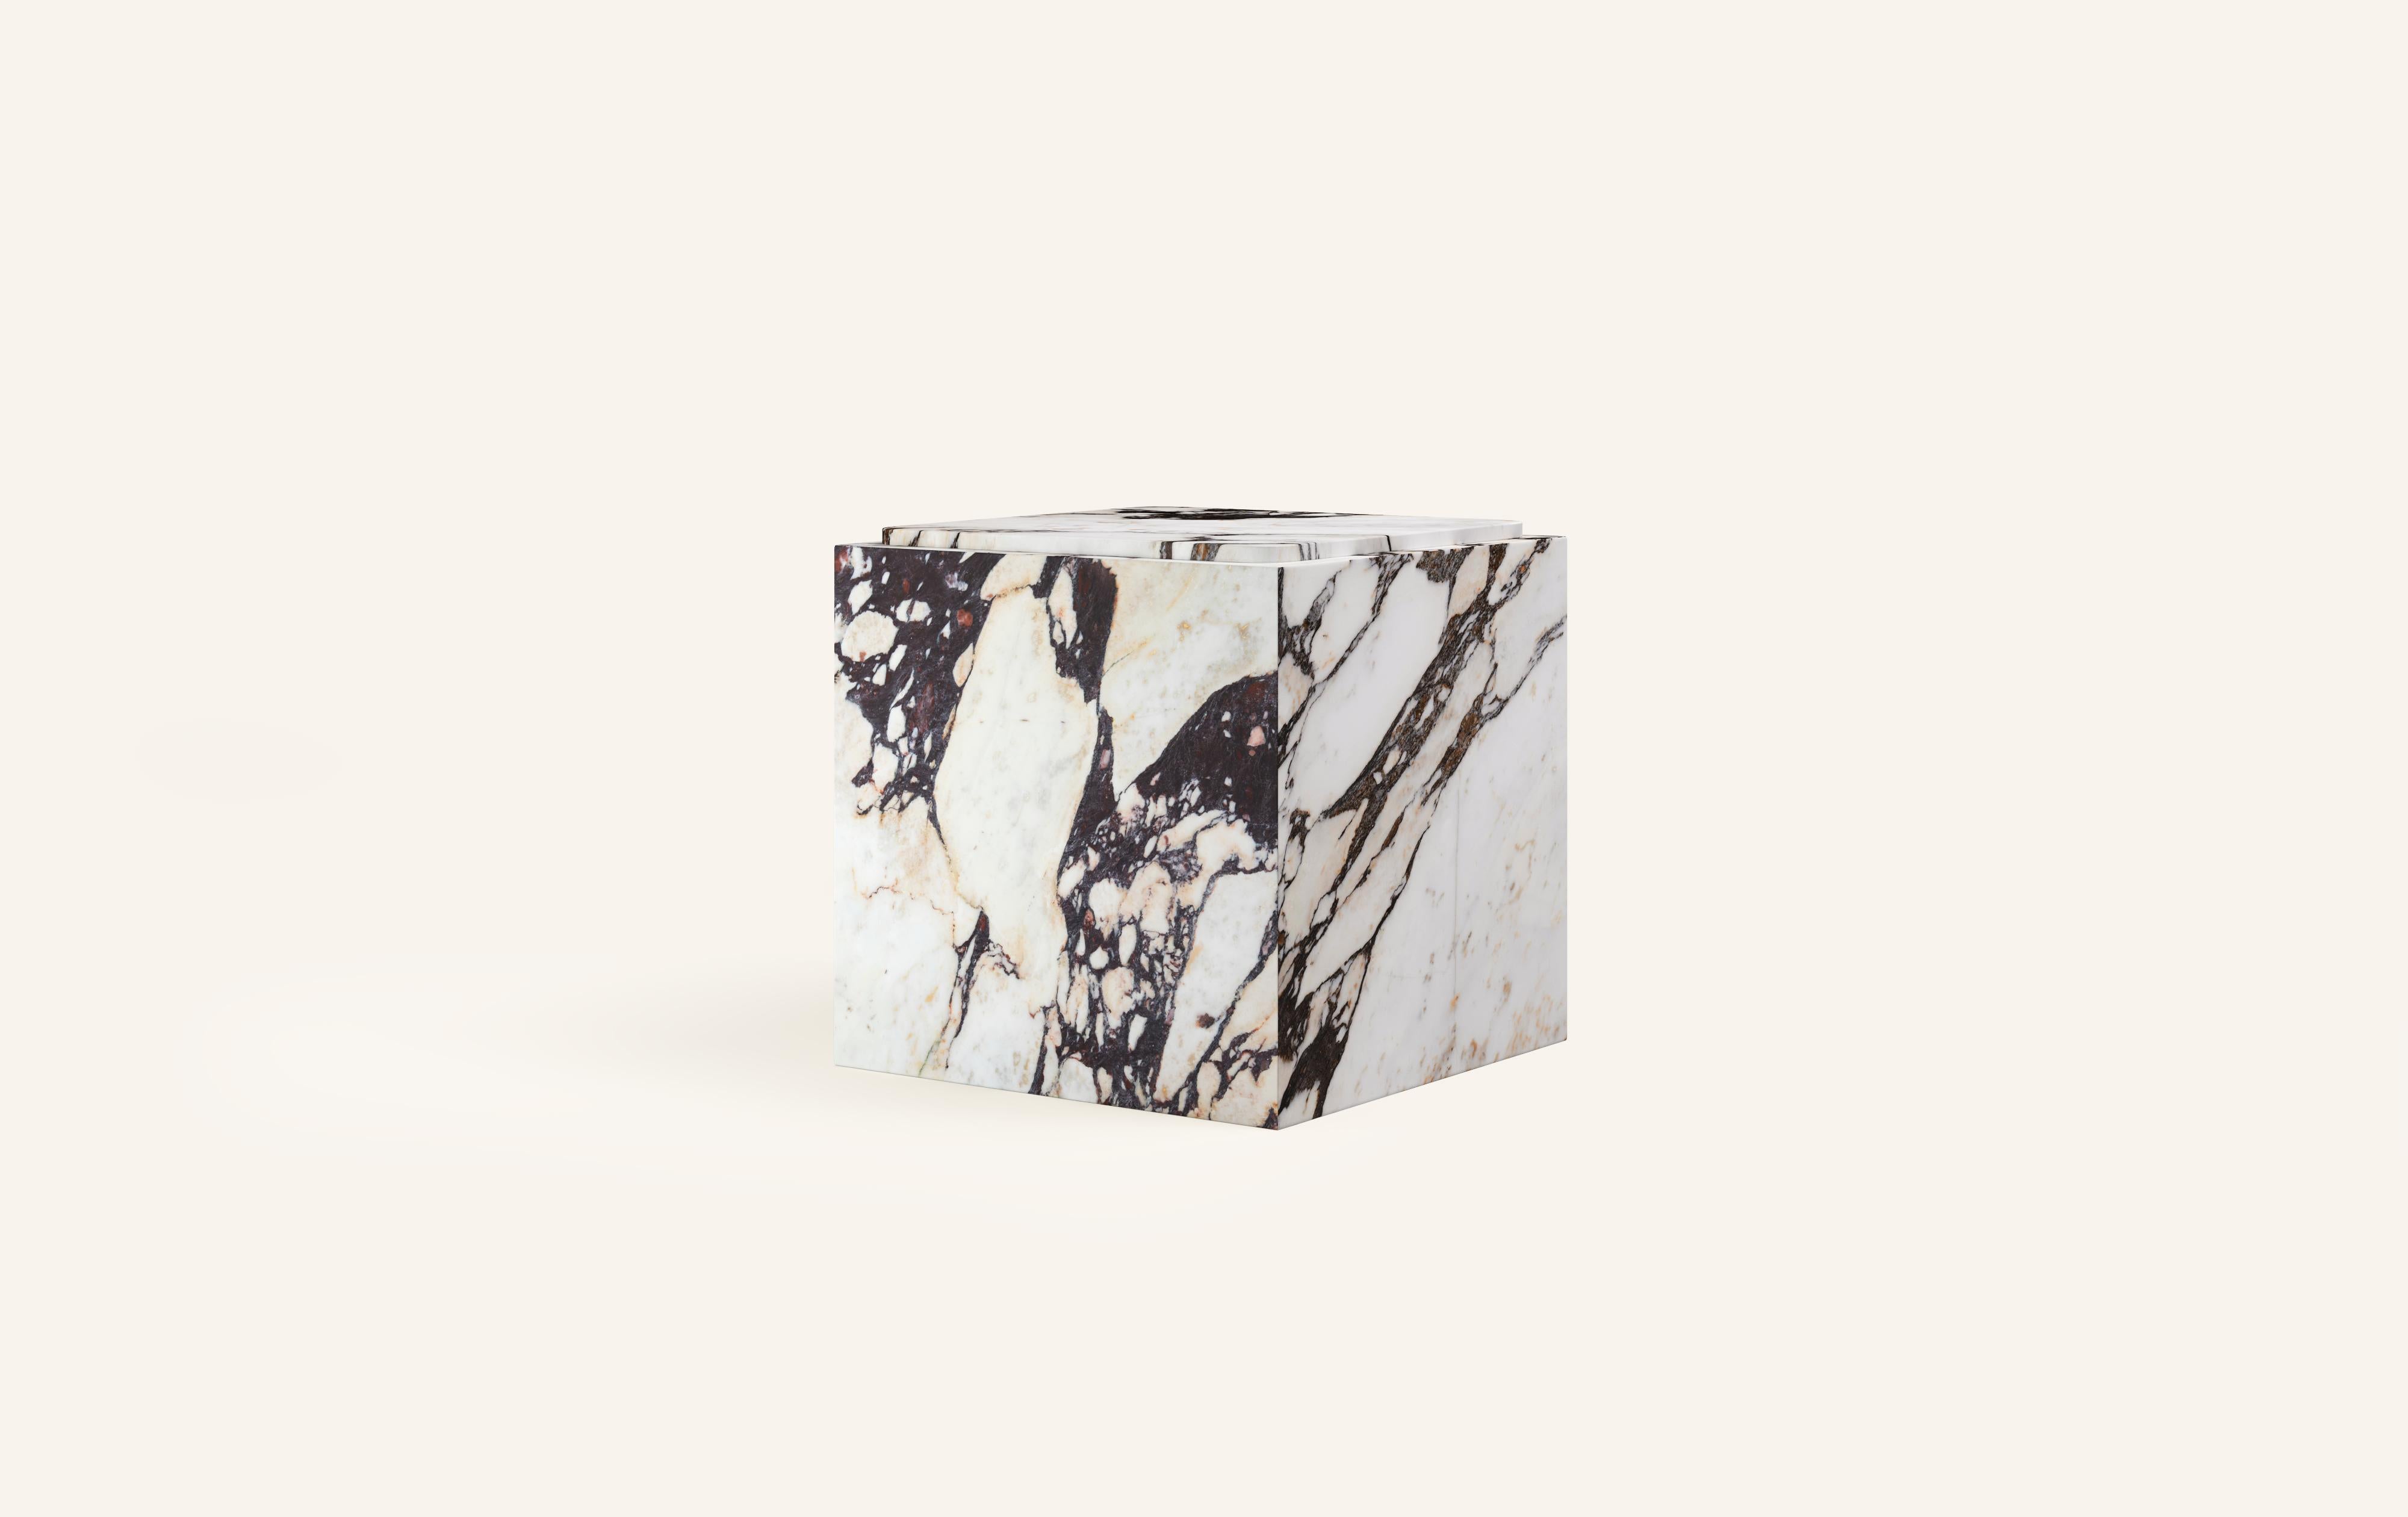 Organic Modern FORM(LA) Cubo Square Side Table 22”L x 22